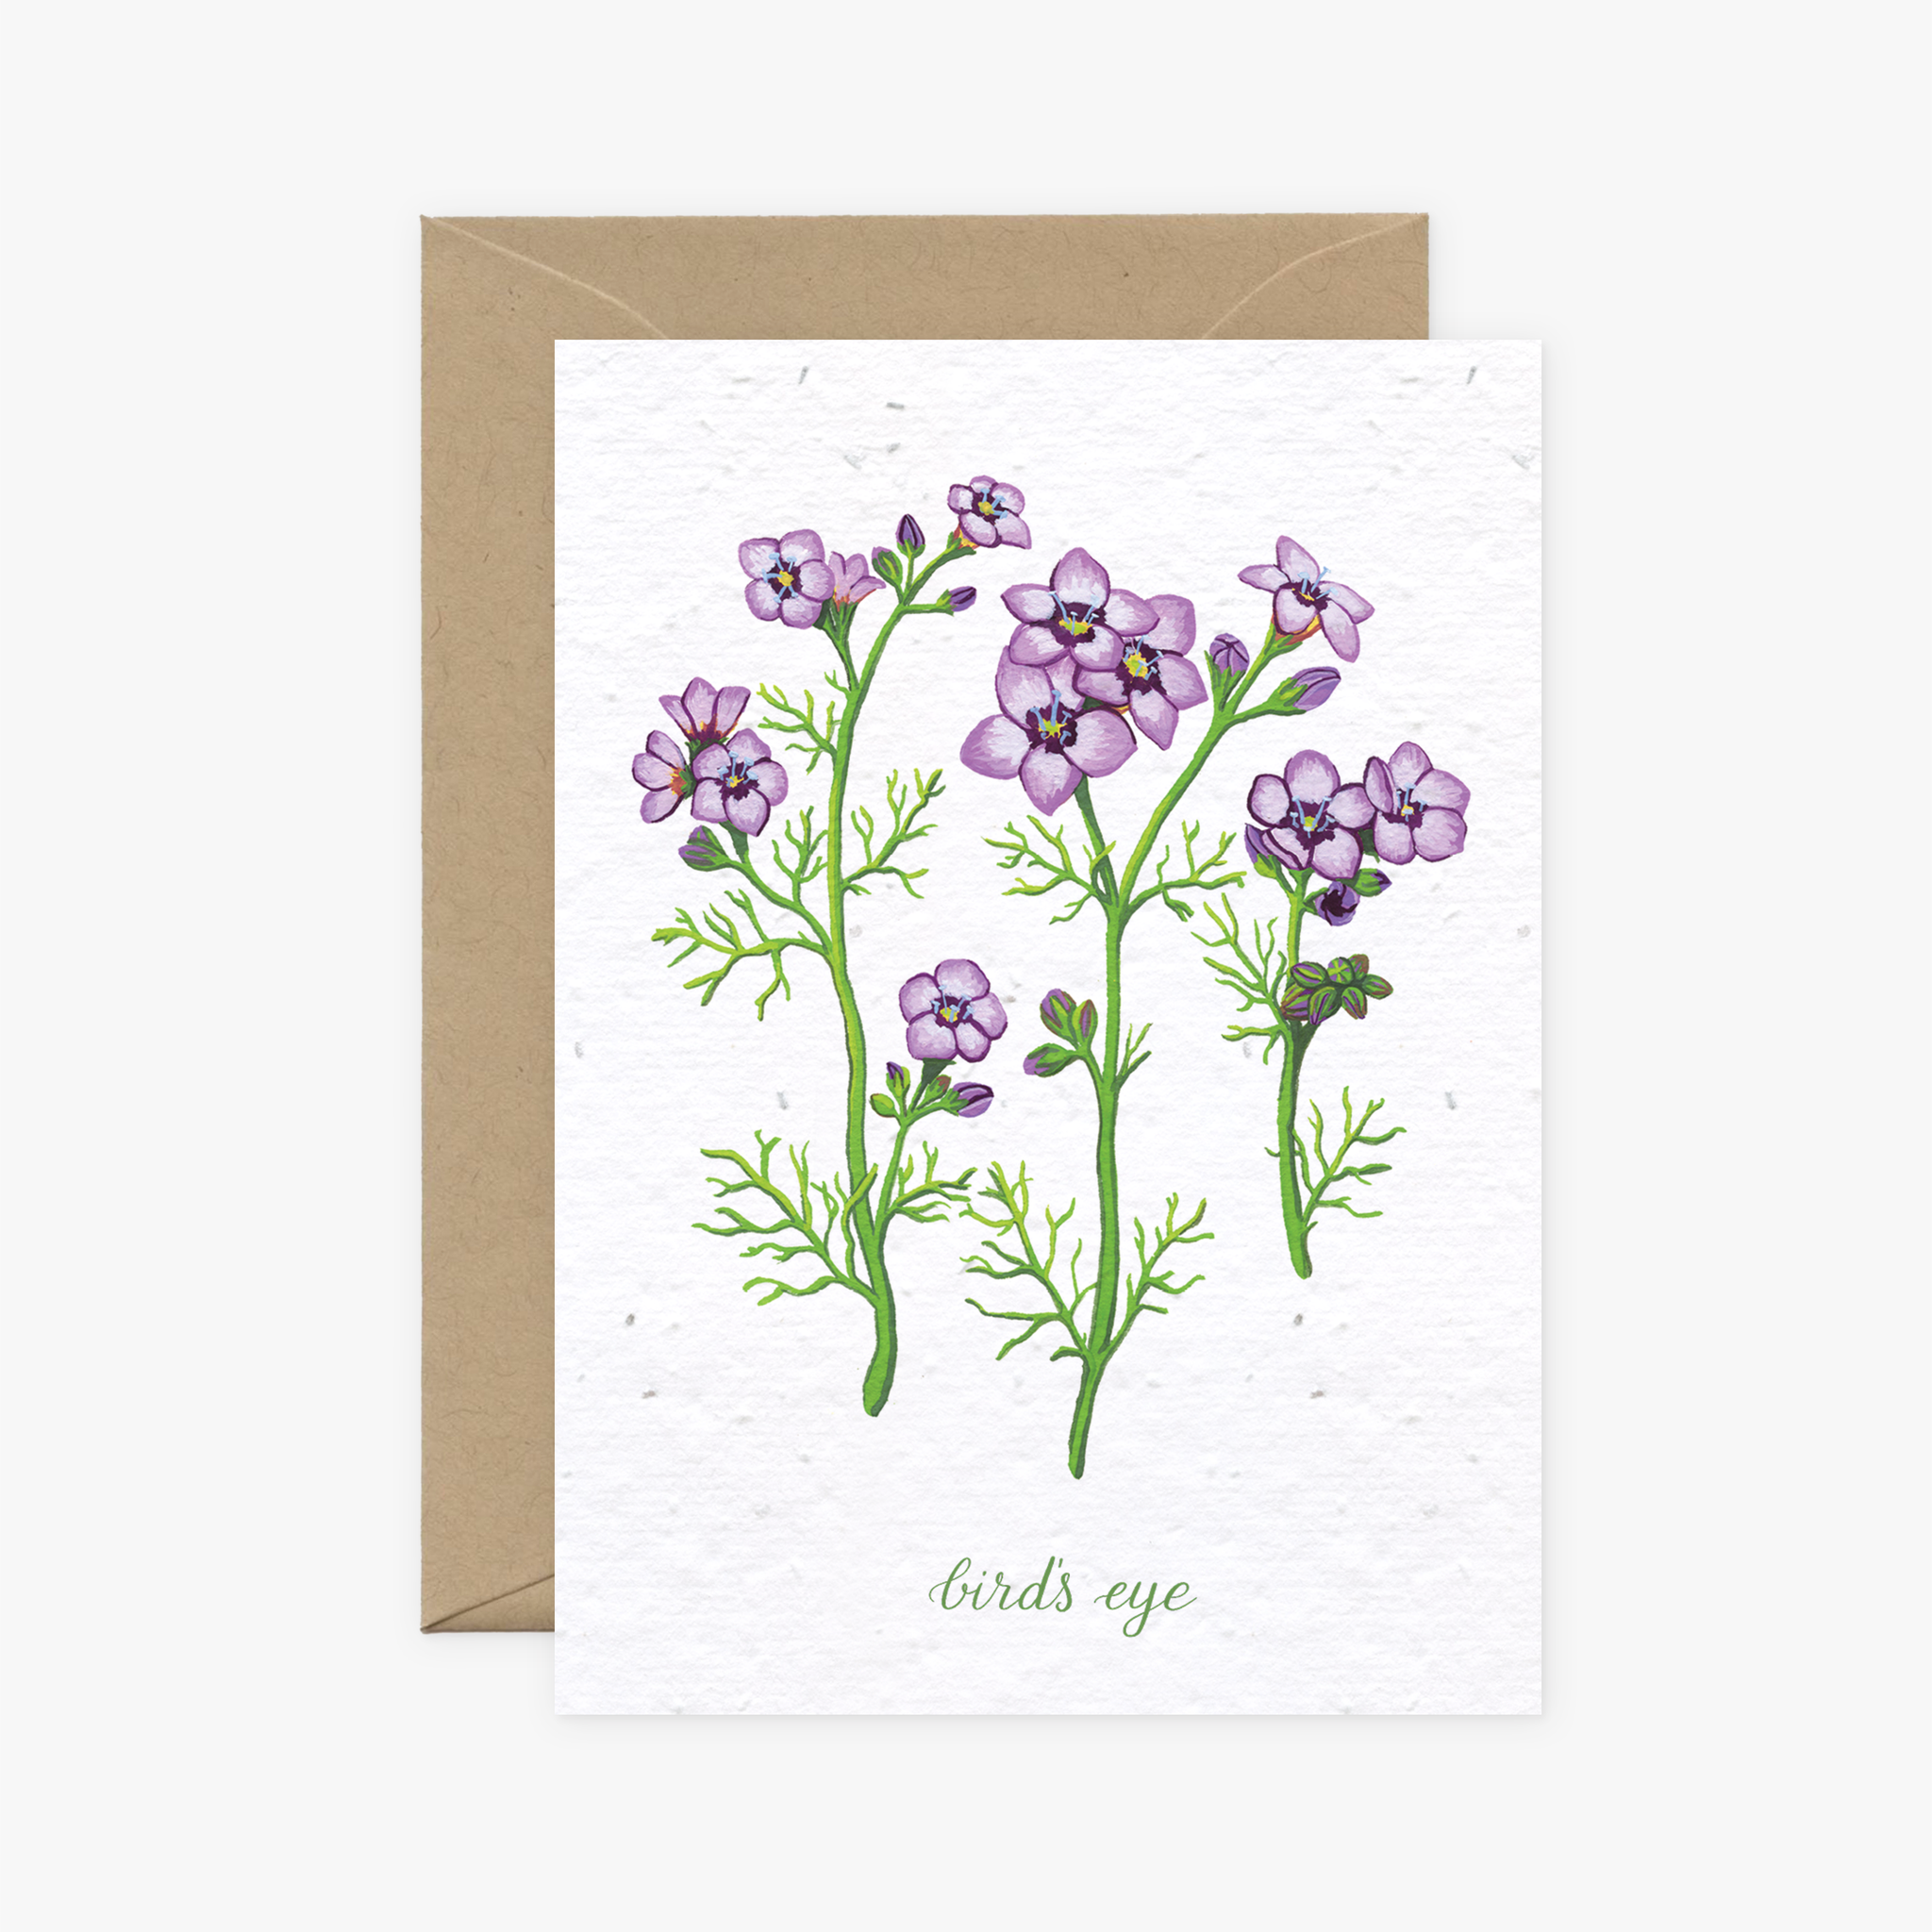 Mumbleweeds - Flowers Cards